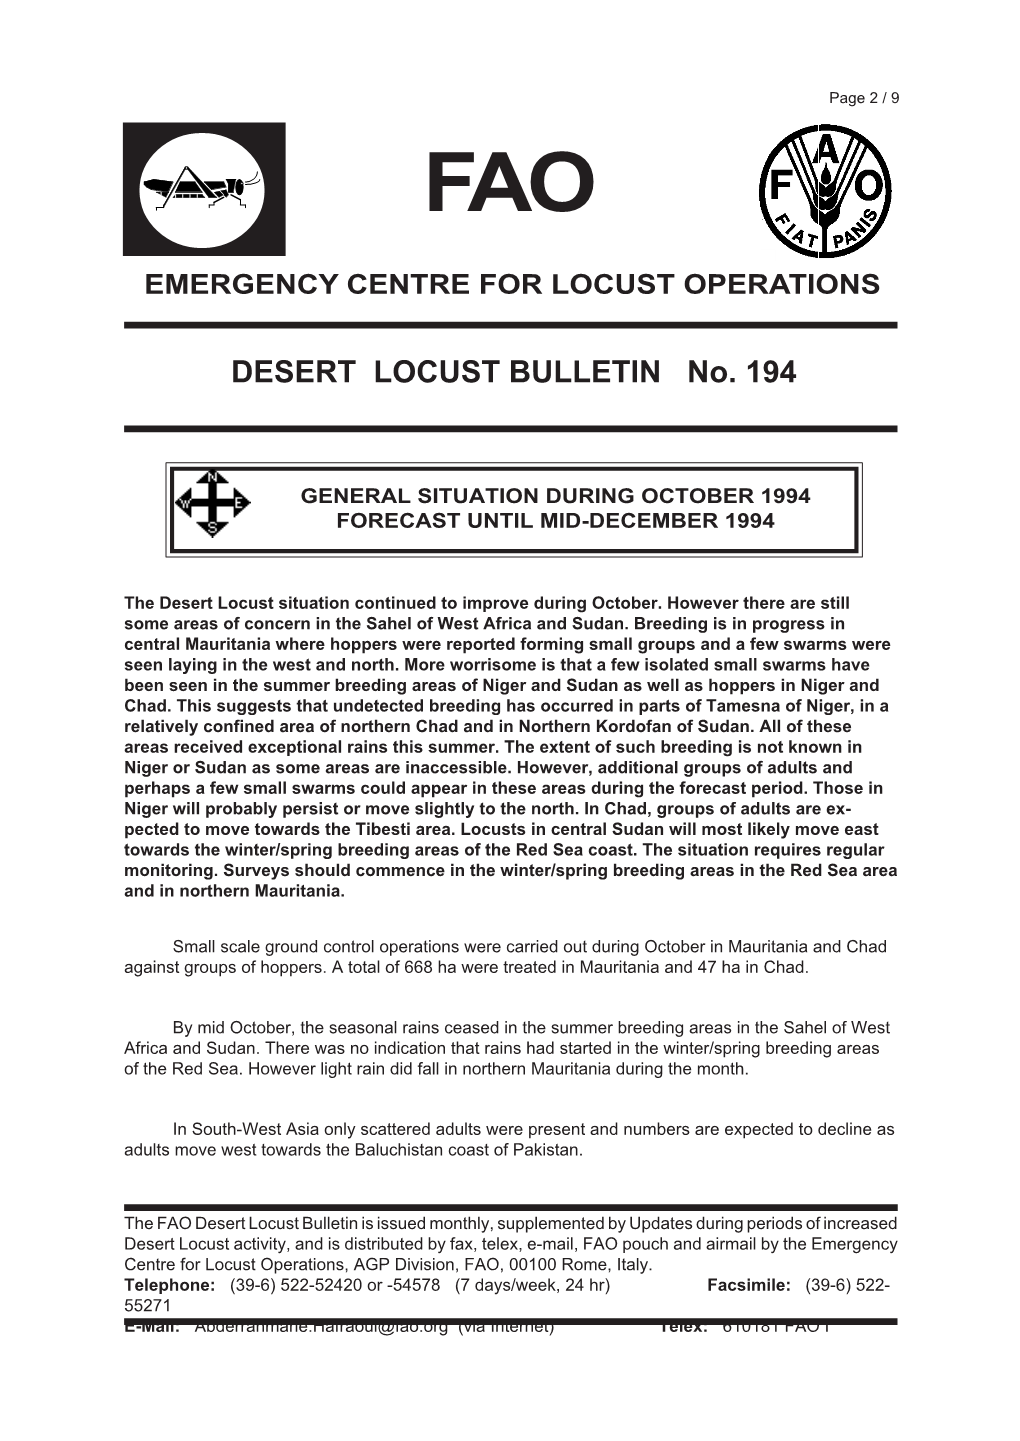 FAO Desert Locust Bulletin 194 (English)